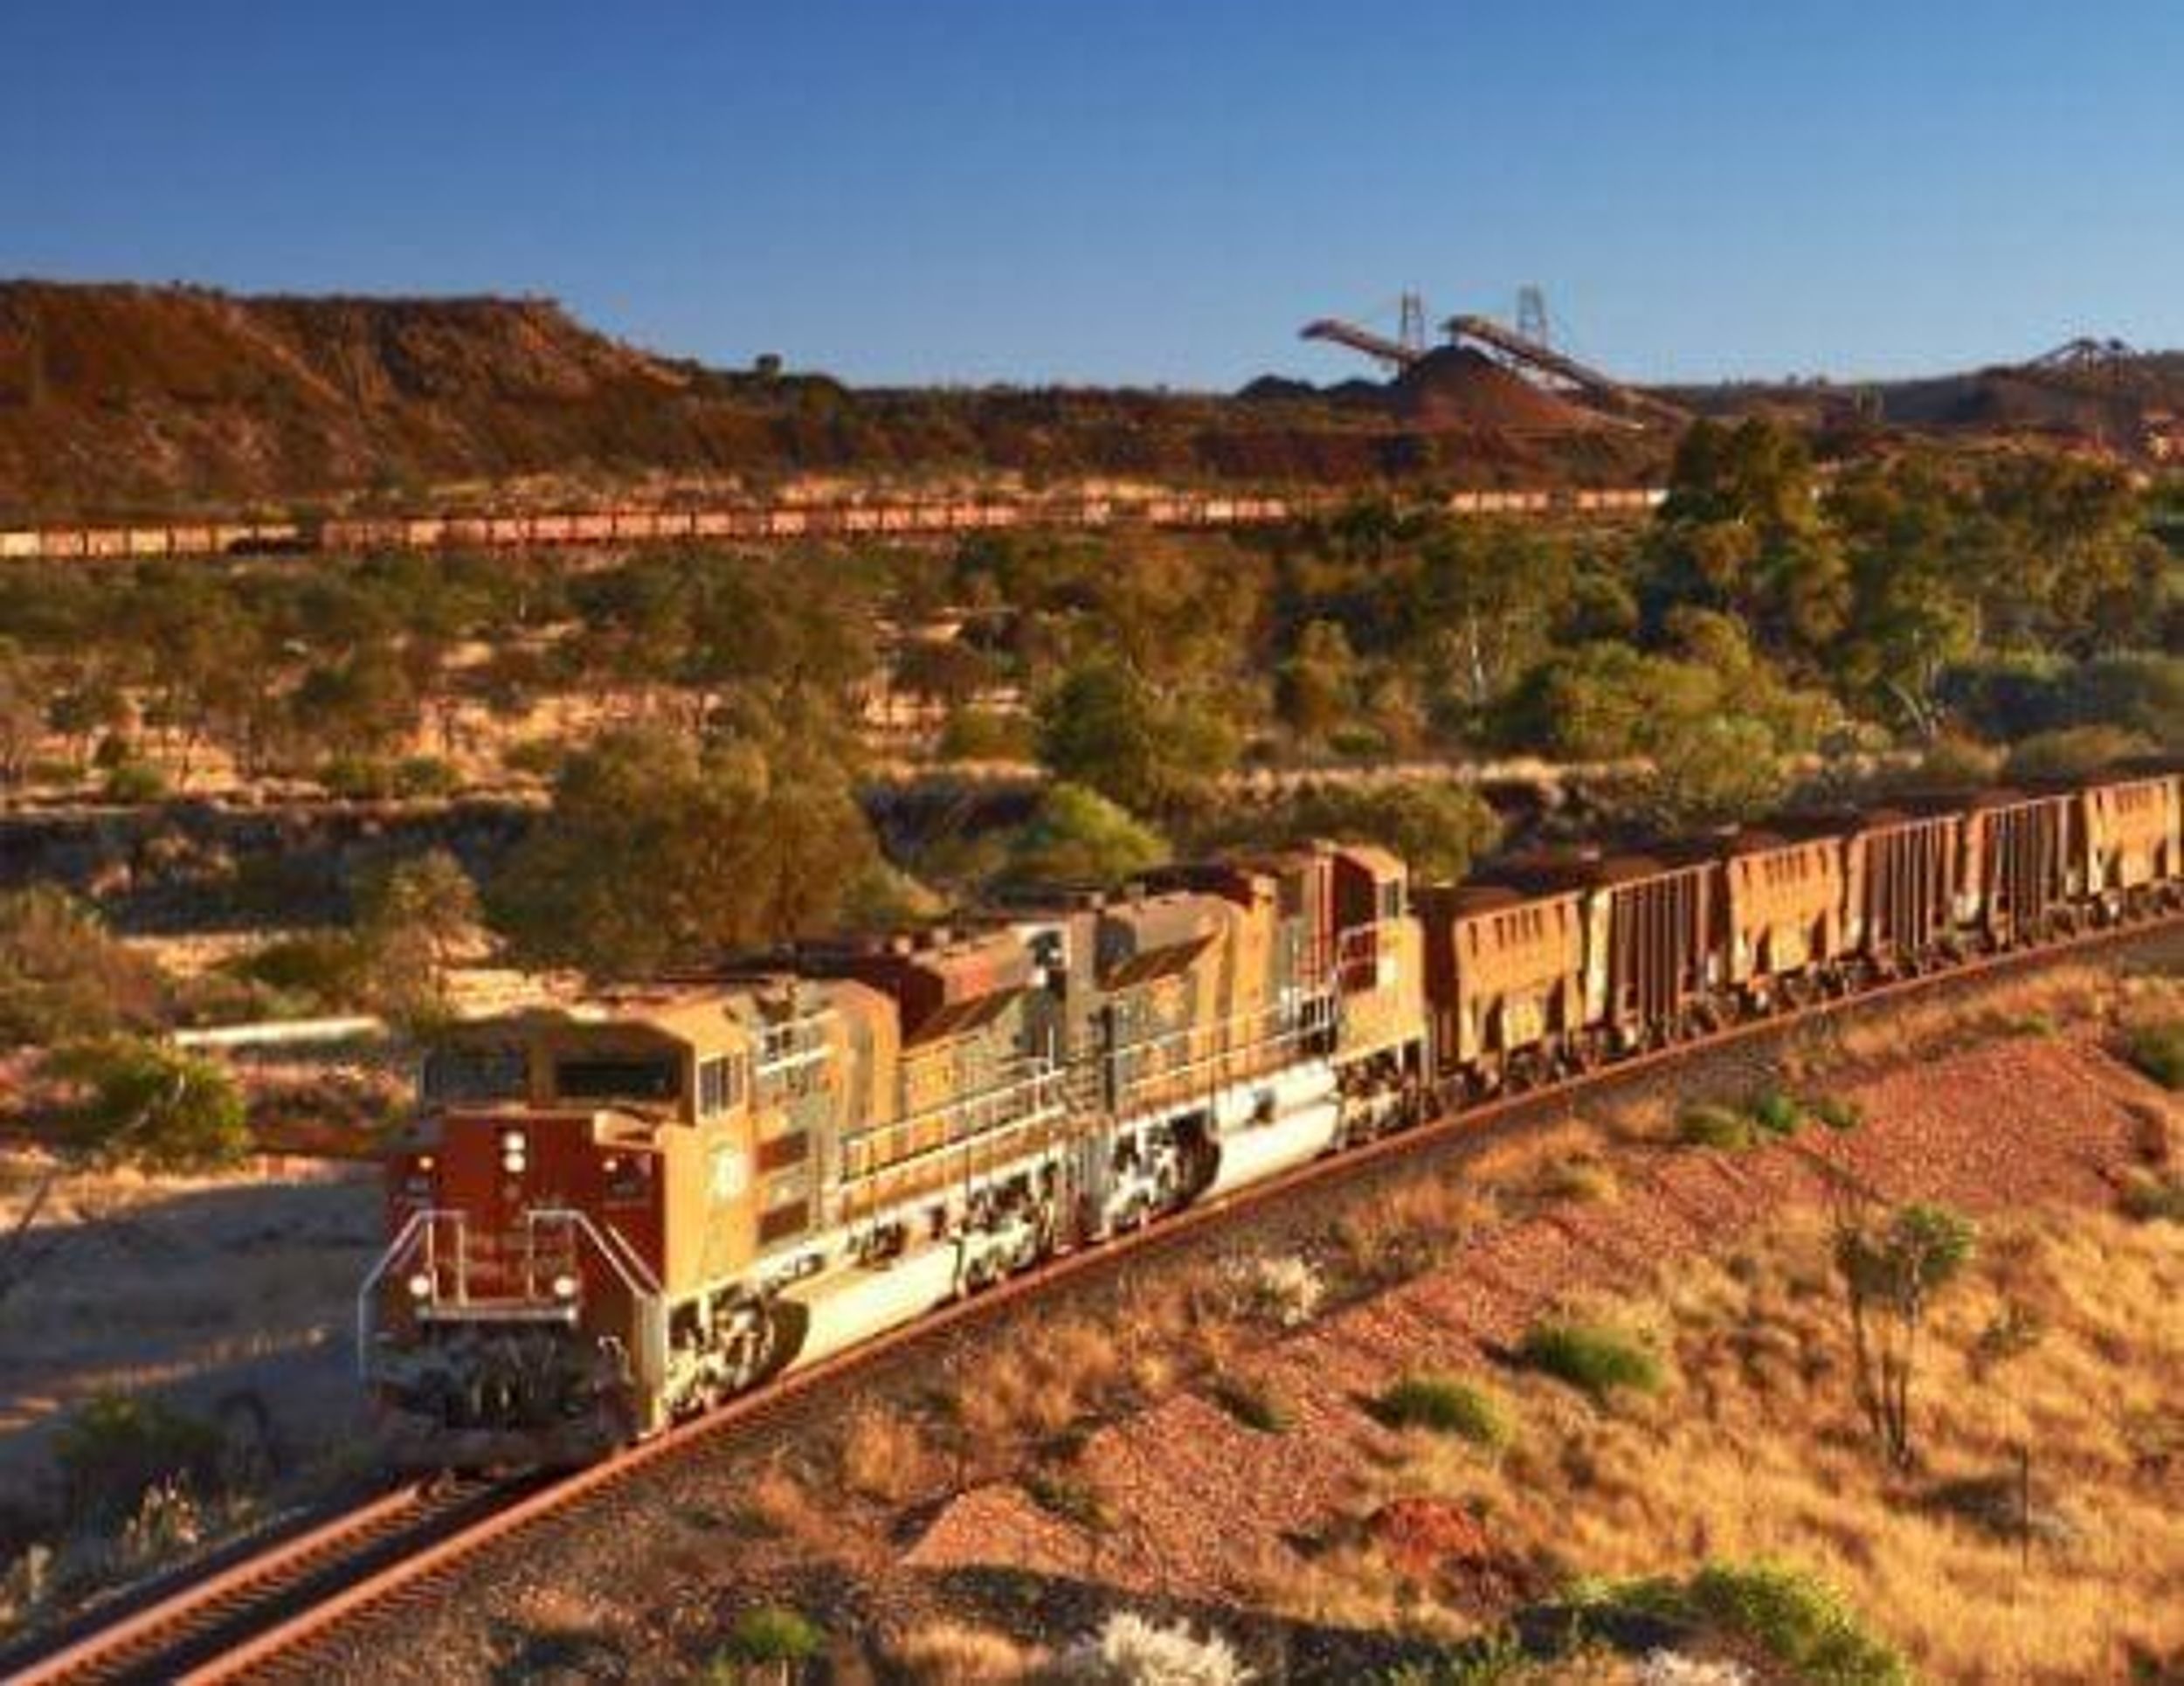 Queensland Rail Optimistic About Mount Isa Line Repairs: Report